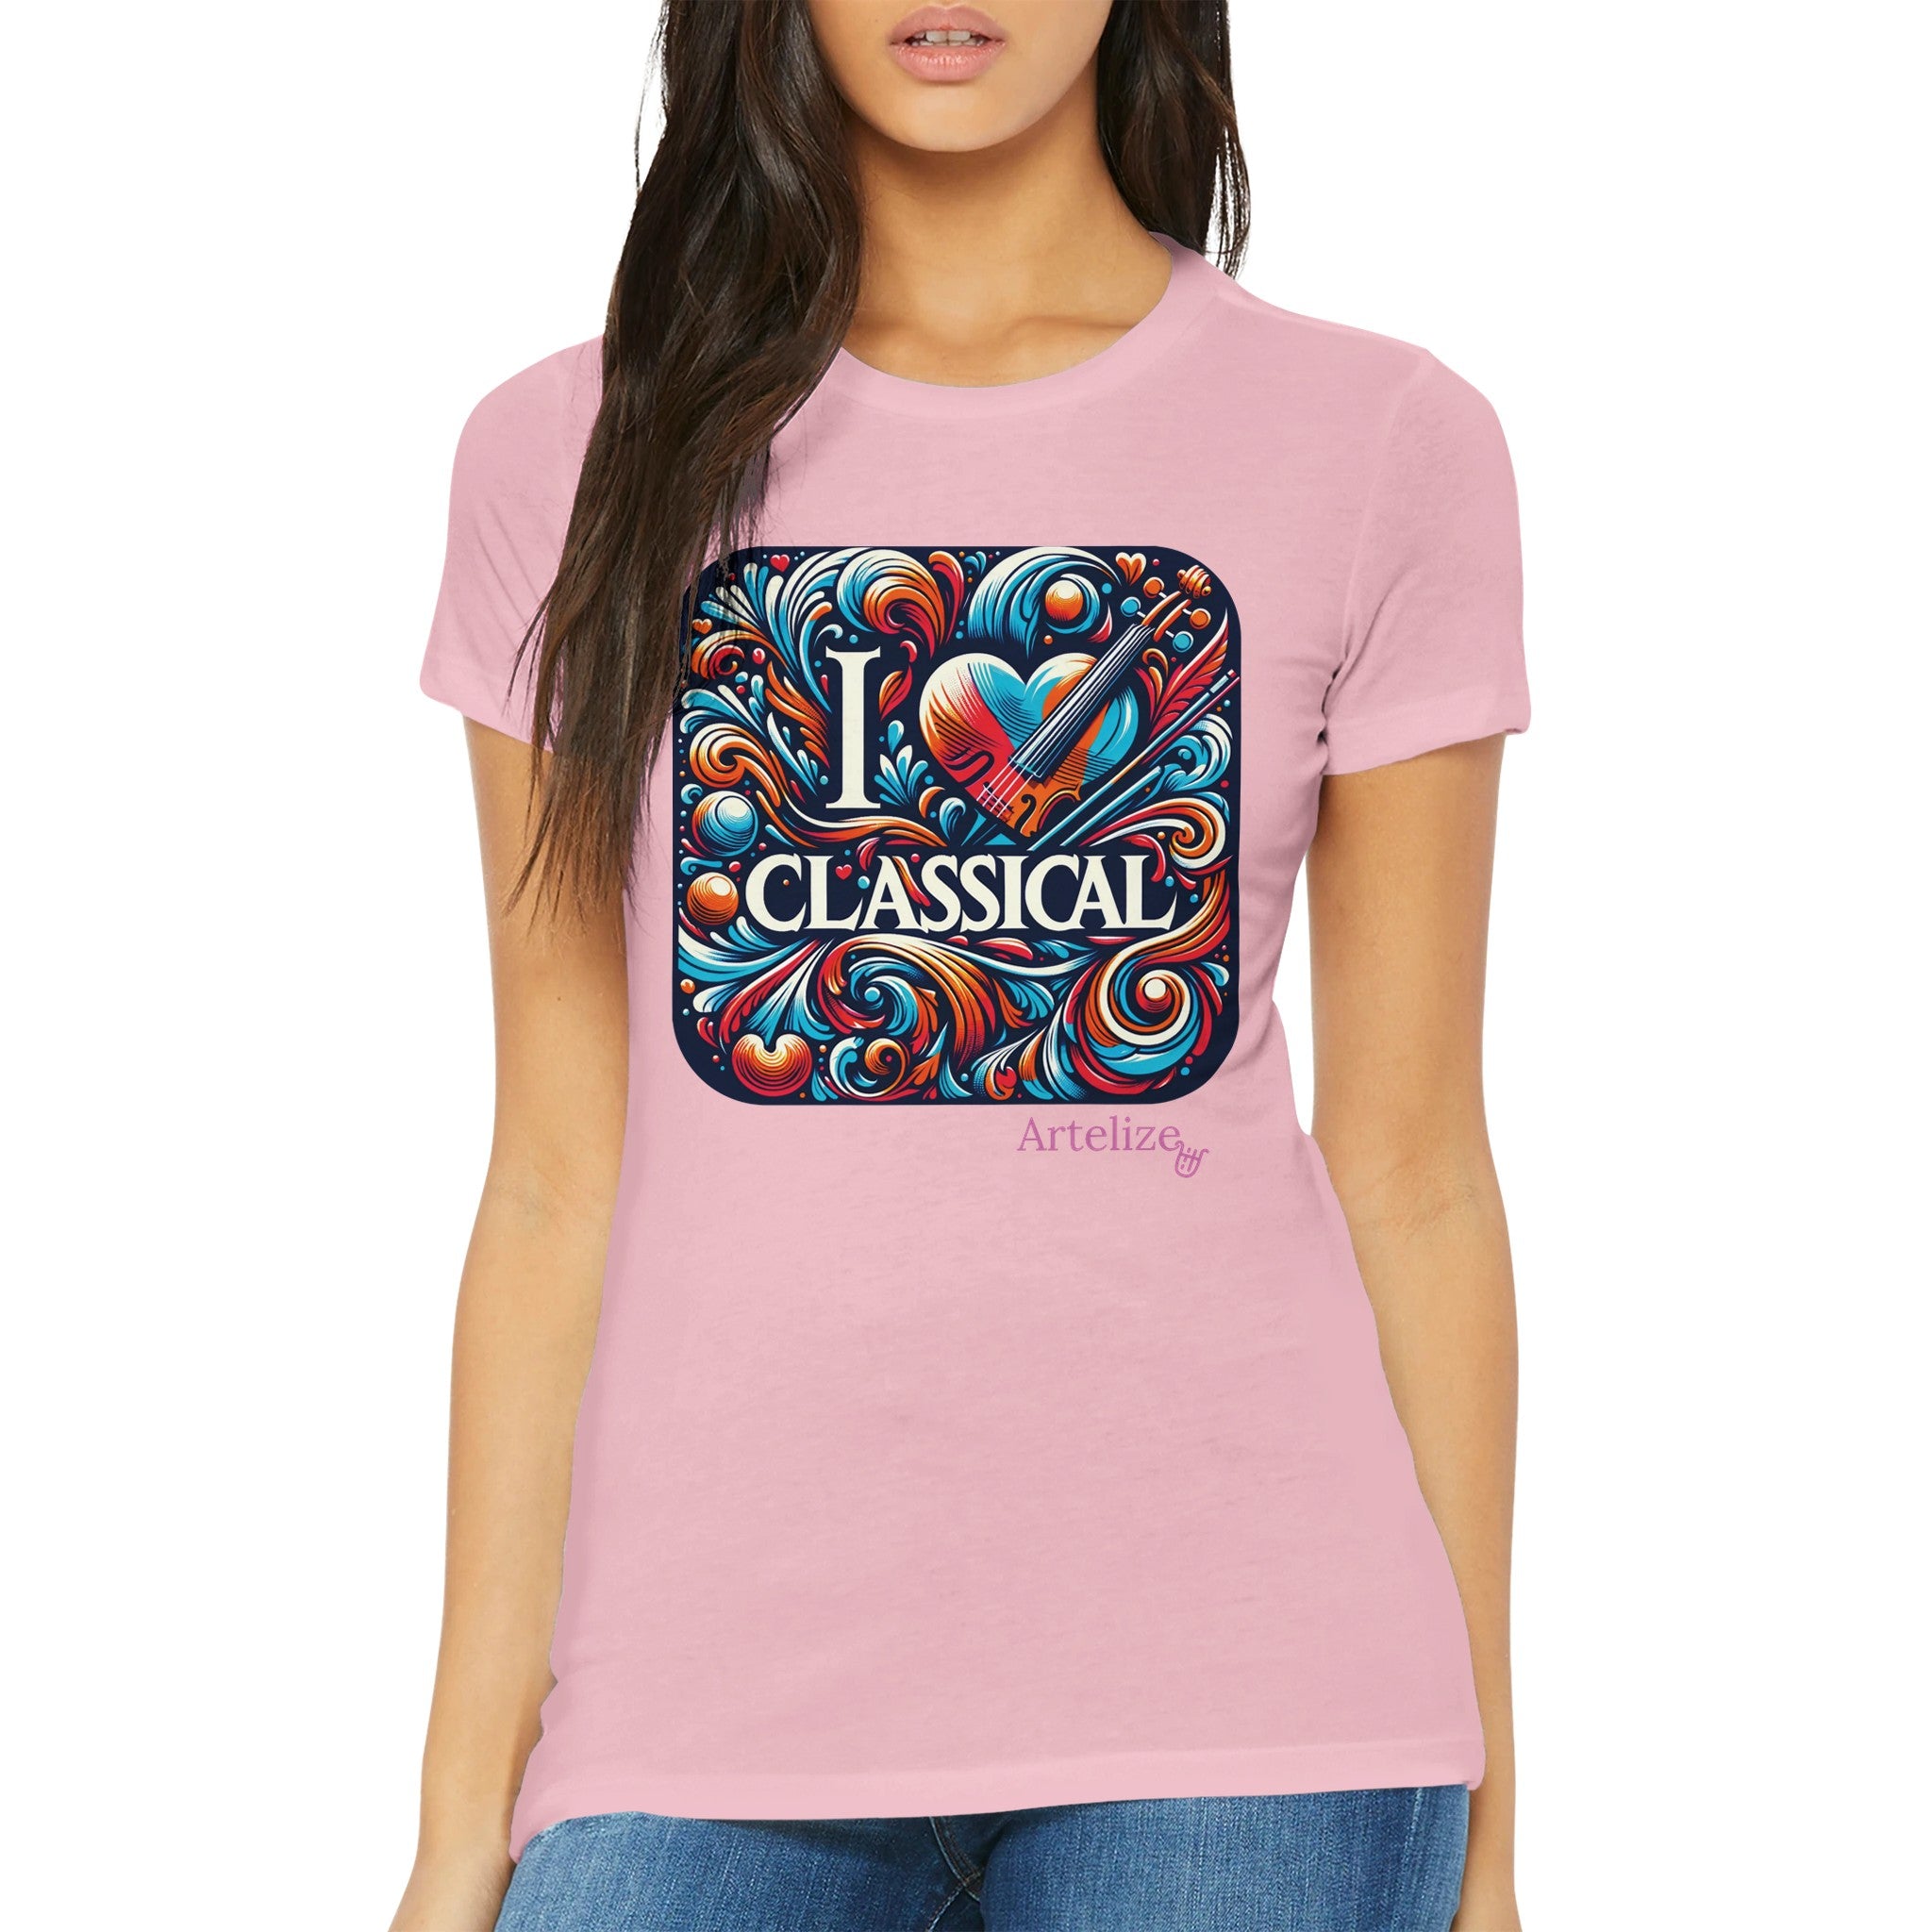 "I LOVE CLASSICAL" Premium Womens Crewneck T-shirt